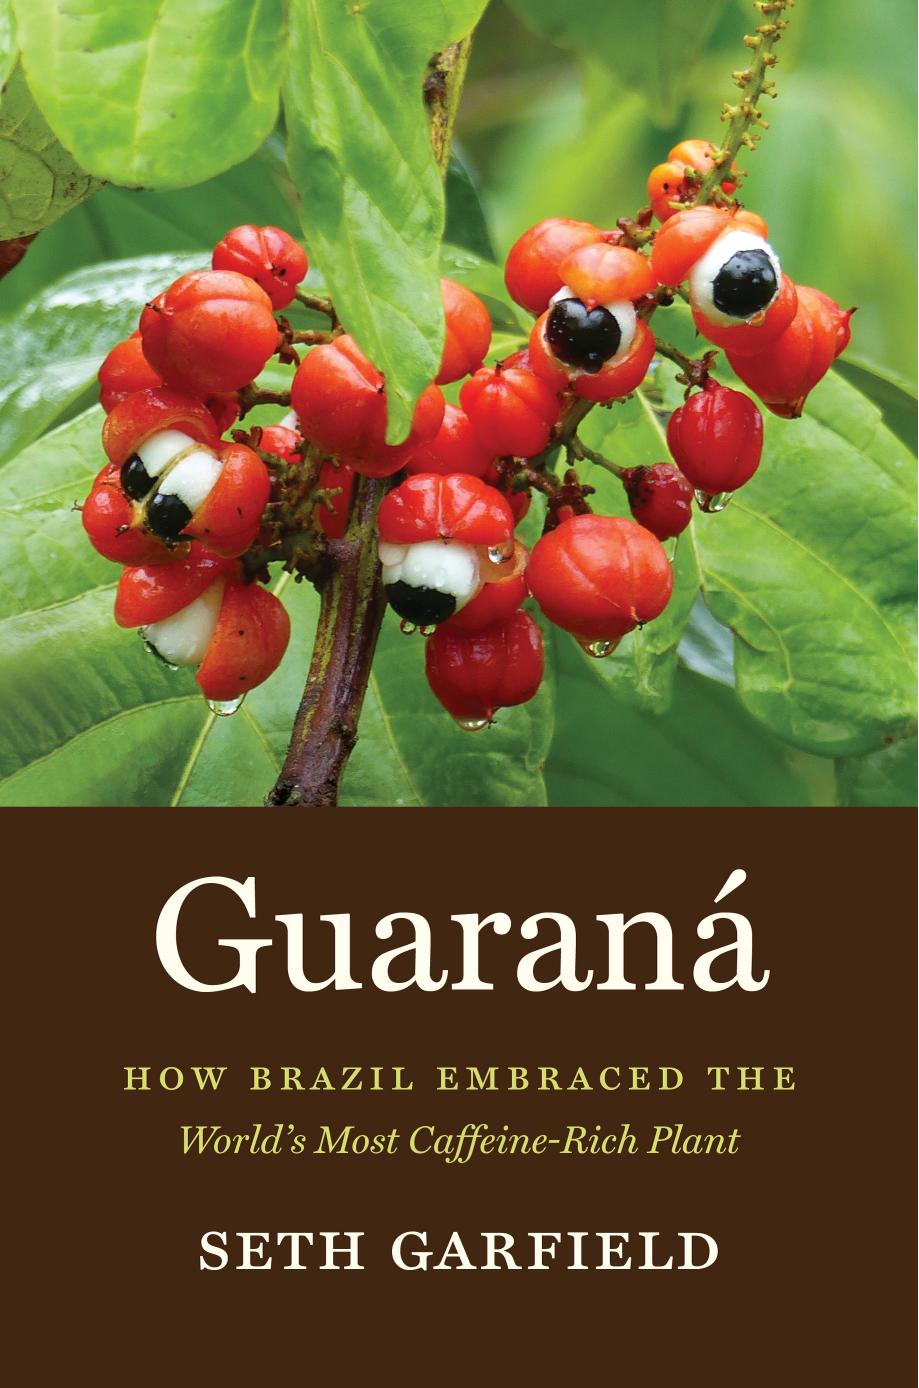 GuaranÃ¡: How Brazil Embraced the World's Most Caffeine-Rich Plant by Seth Garfield